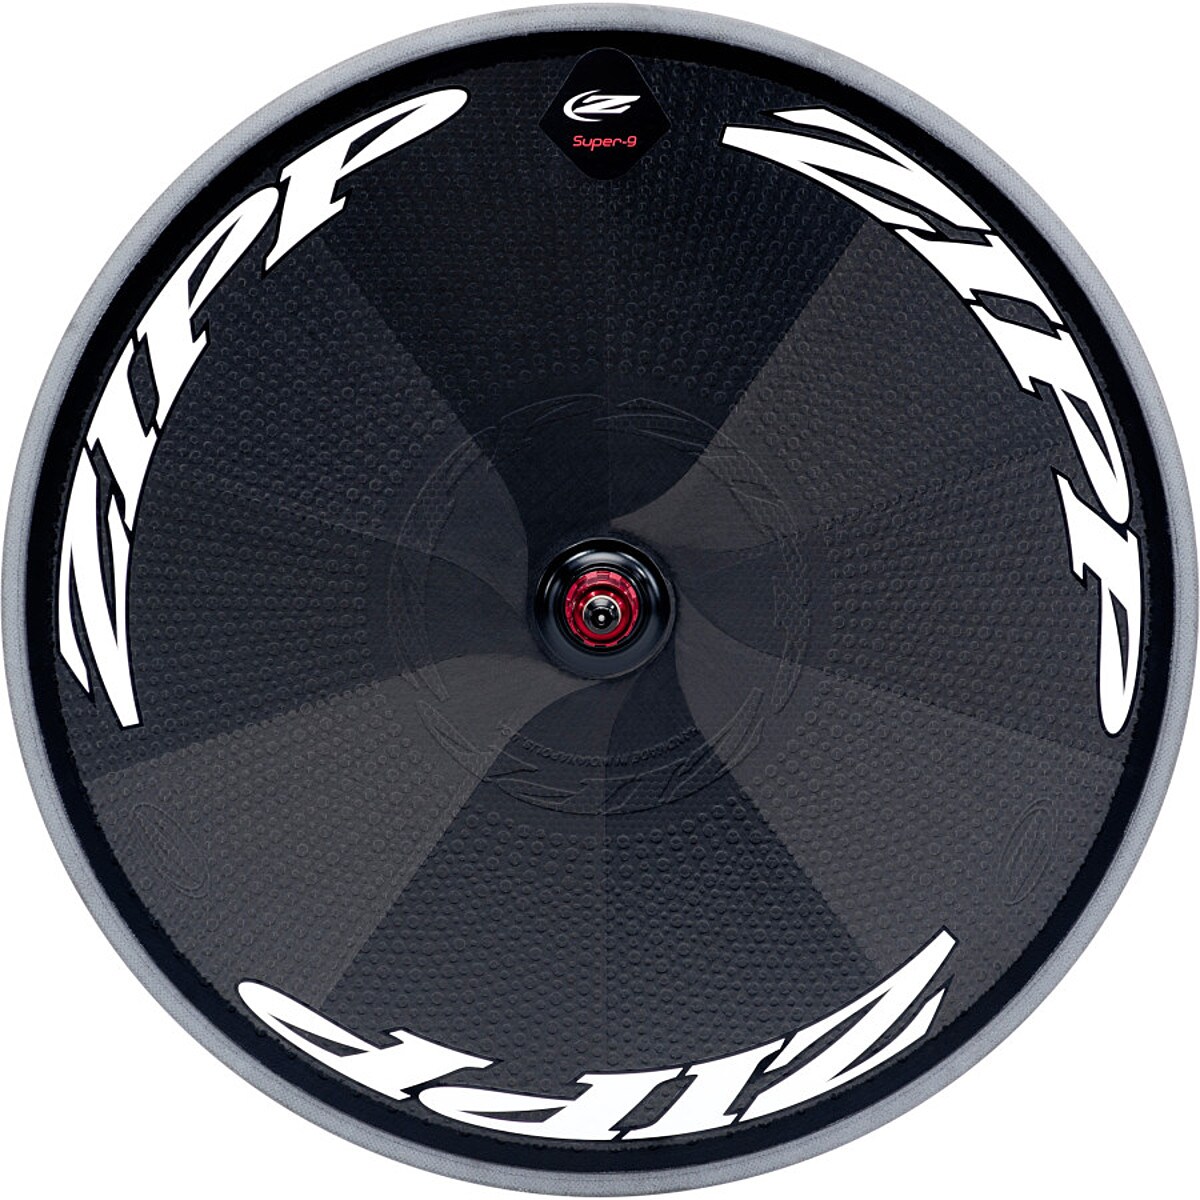 Zipp Super-9 Carbon Disc Wheel - Tubular